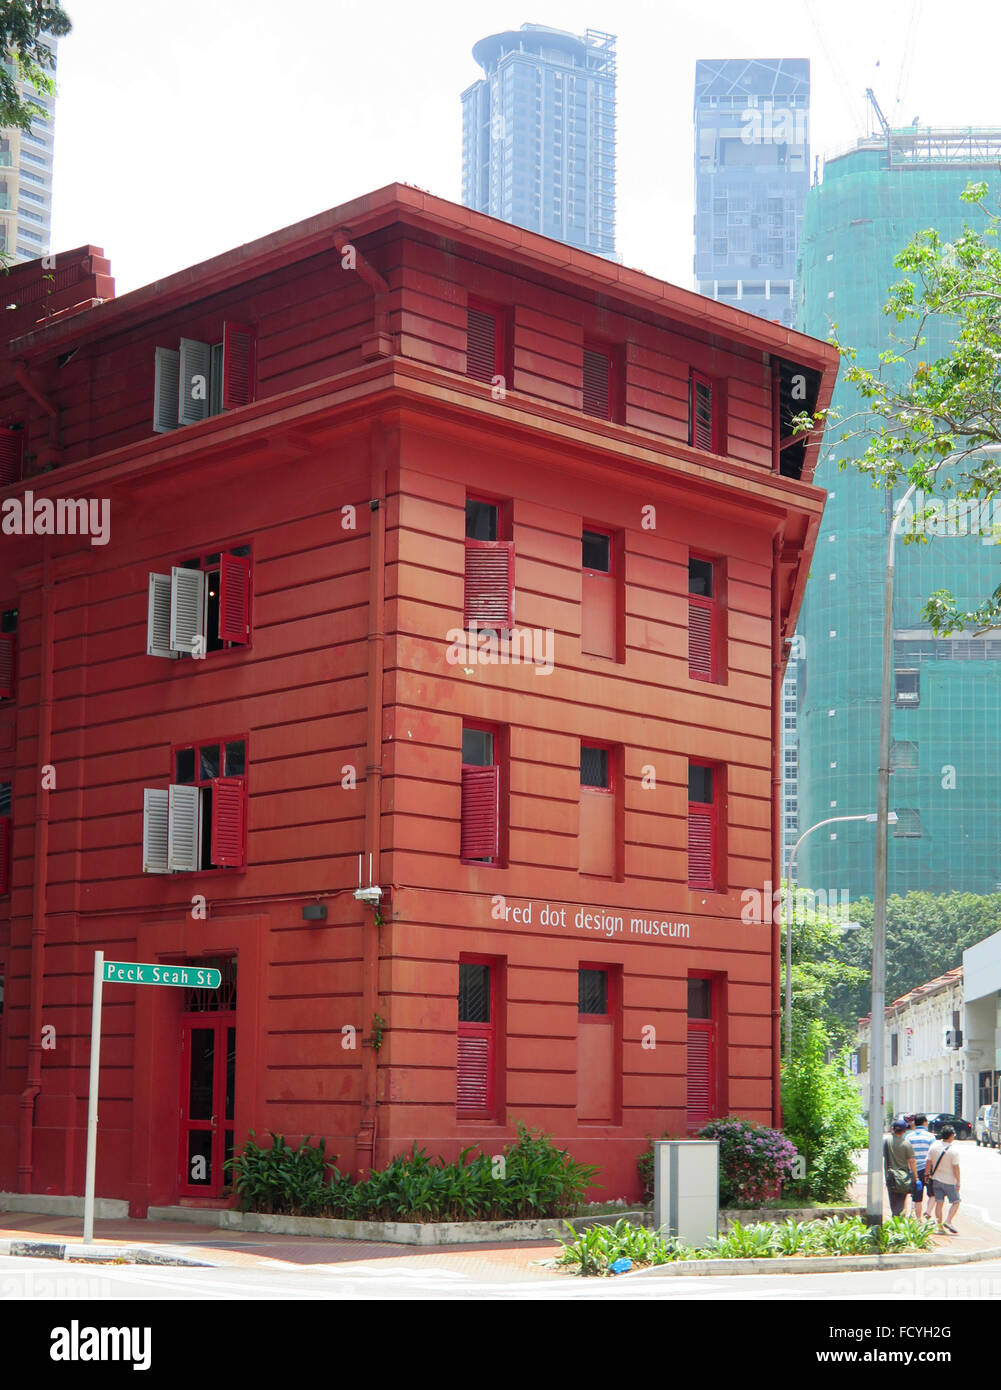 Red Dot design museum, Chinatown, Singapour, Asie Banque D'Images